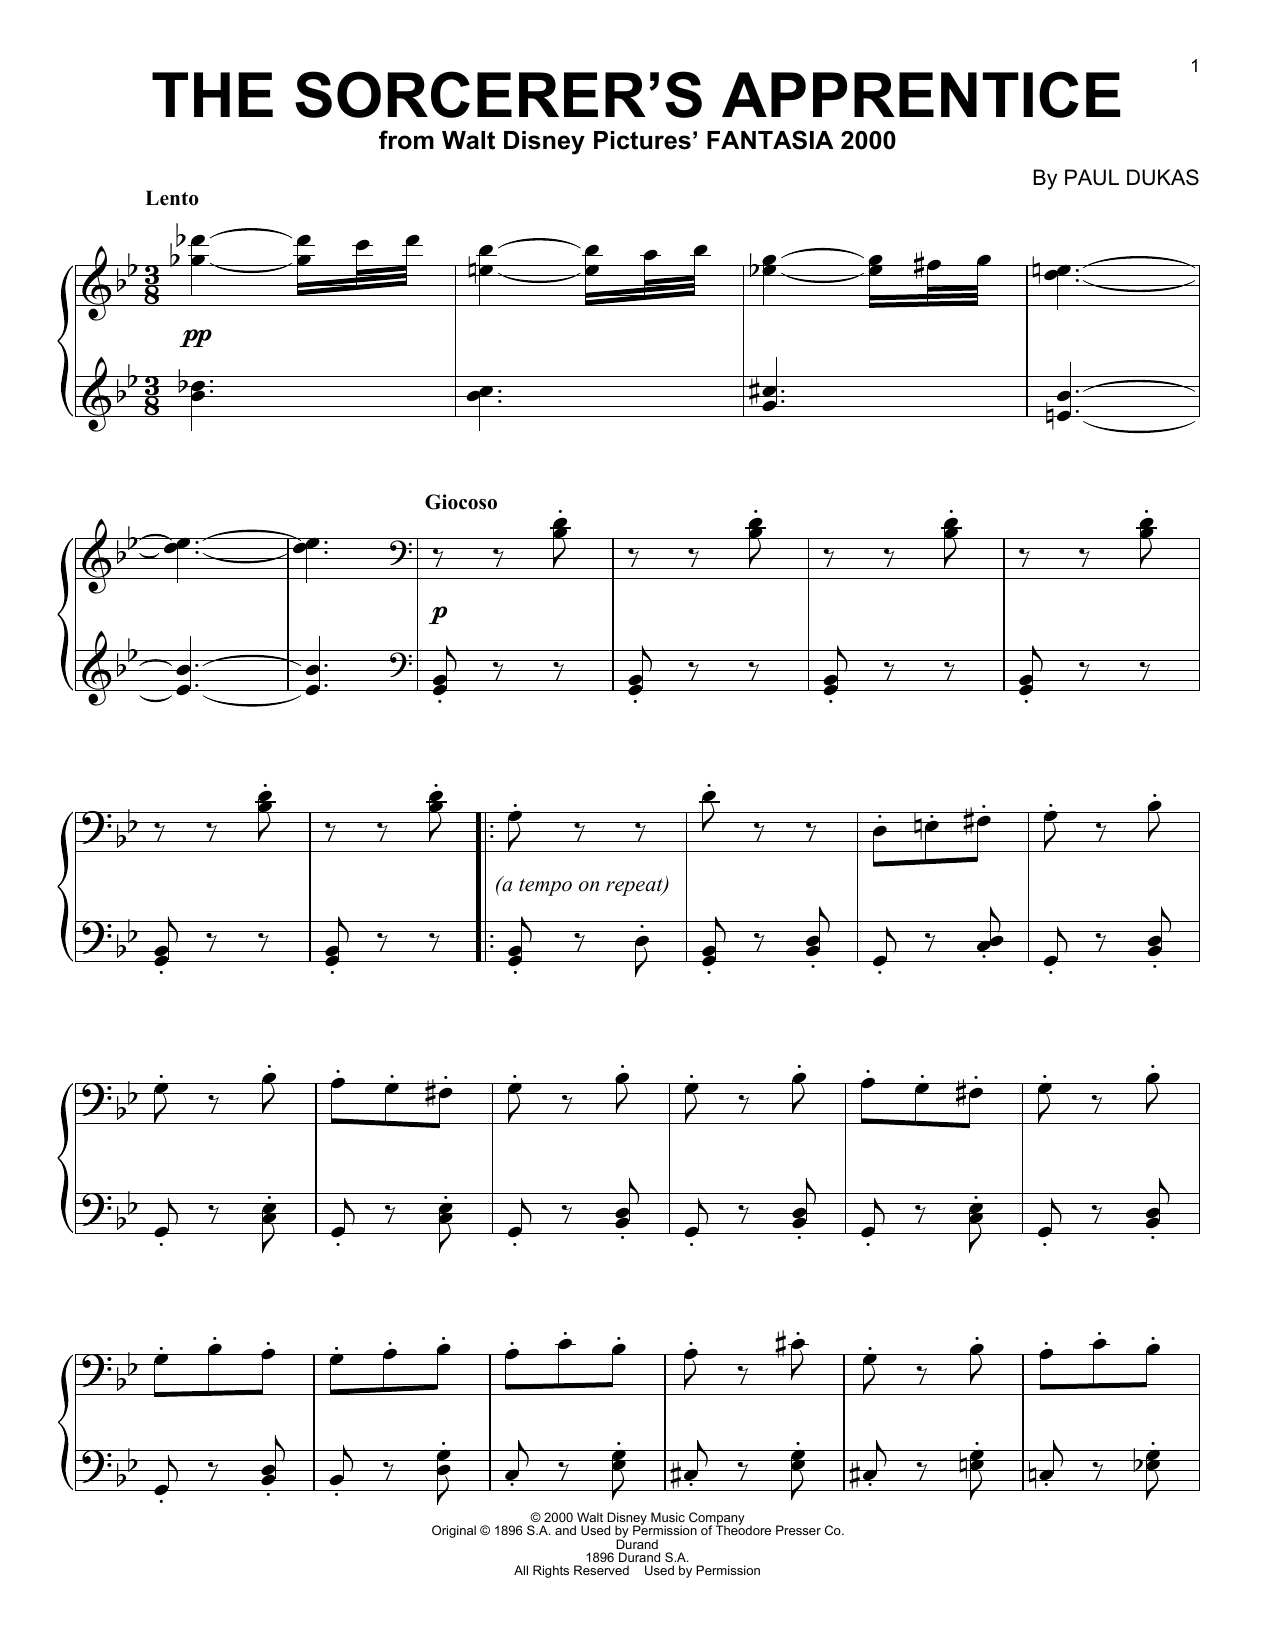 Paul Dukas The Sorcerer's Apprentice Sheet Music Notes & Chords for Viola - Download or Print PDF